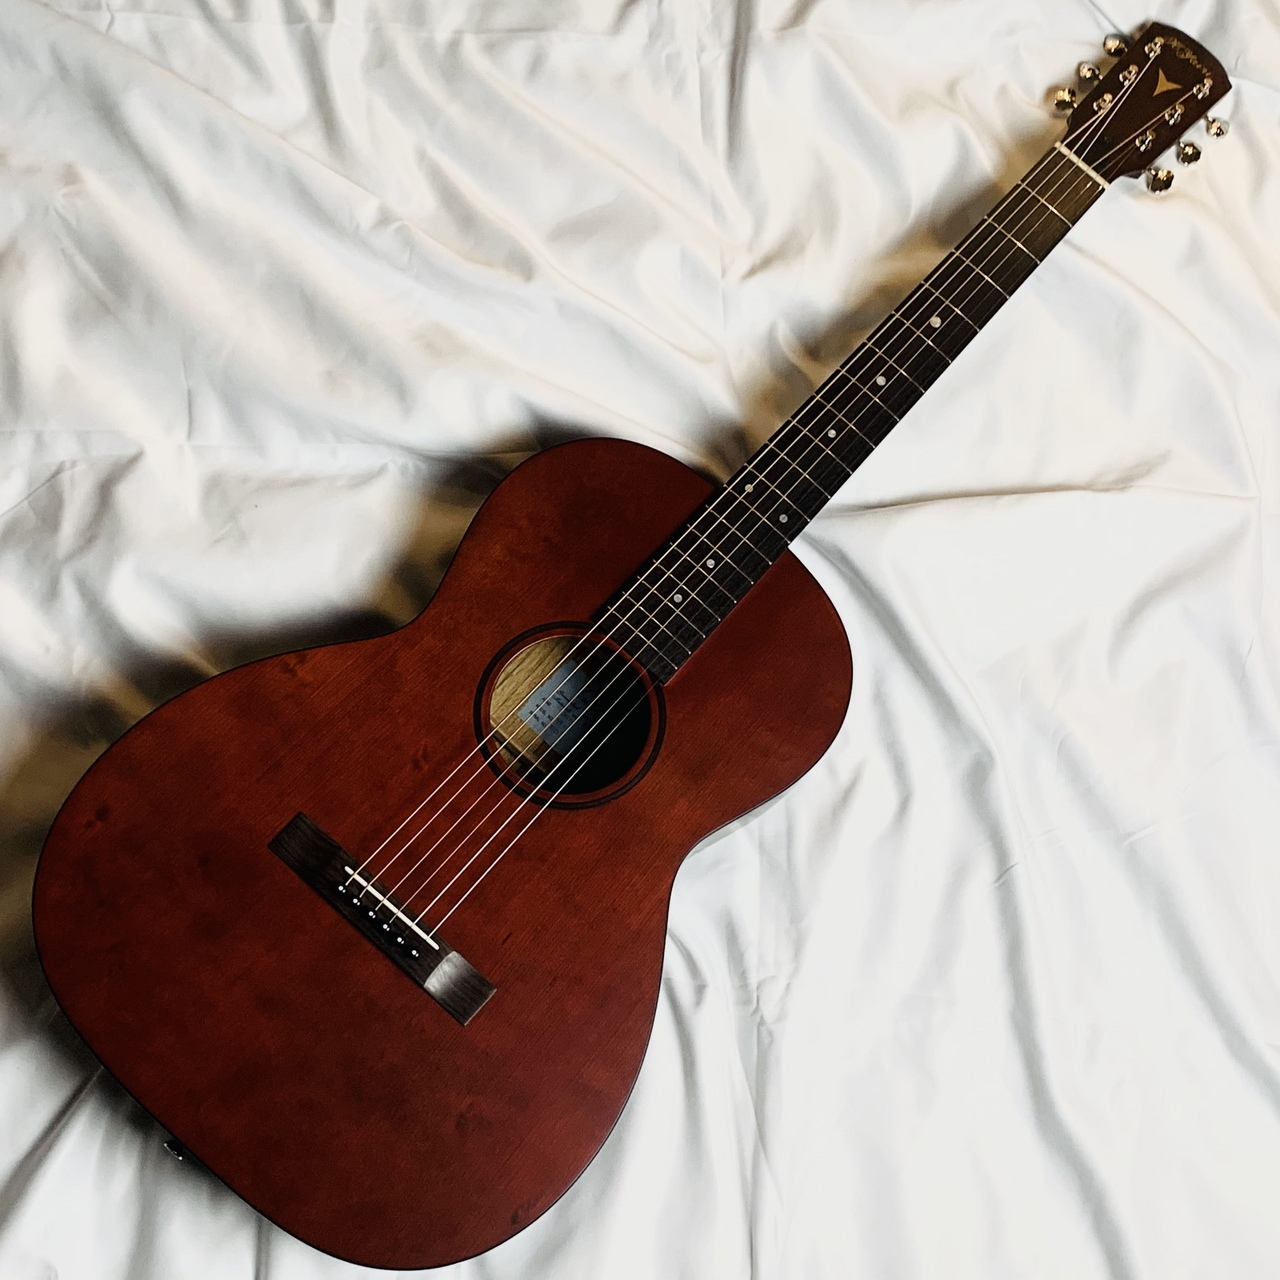 K made in japan日本製アンティークギター